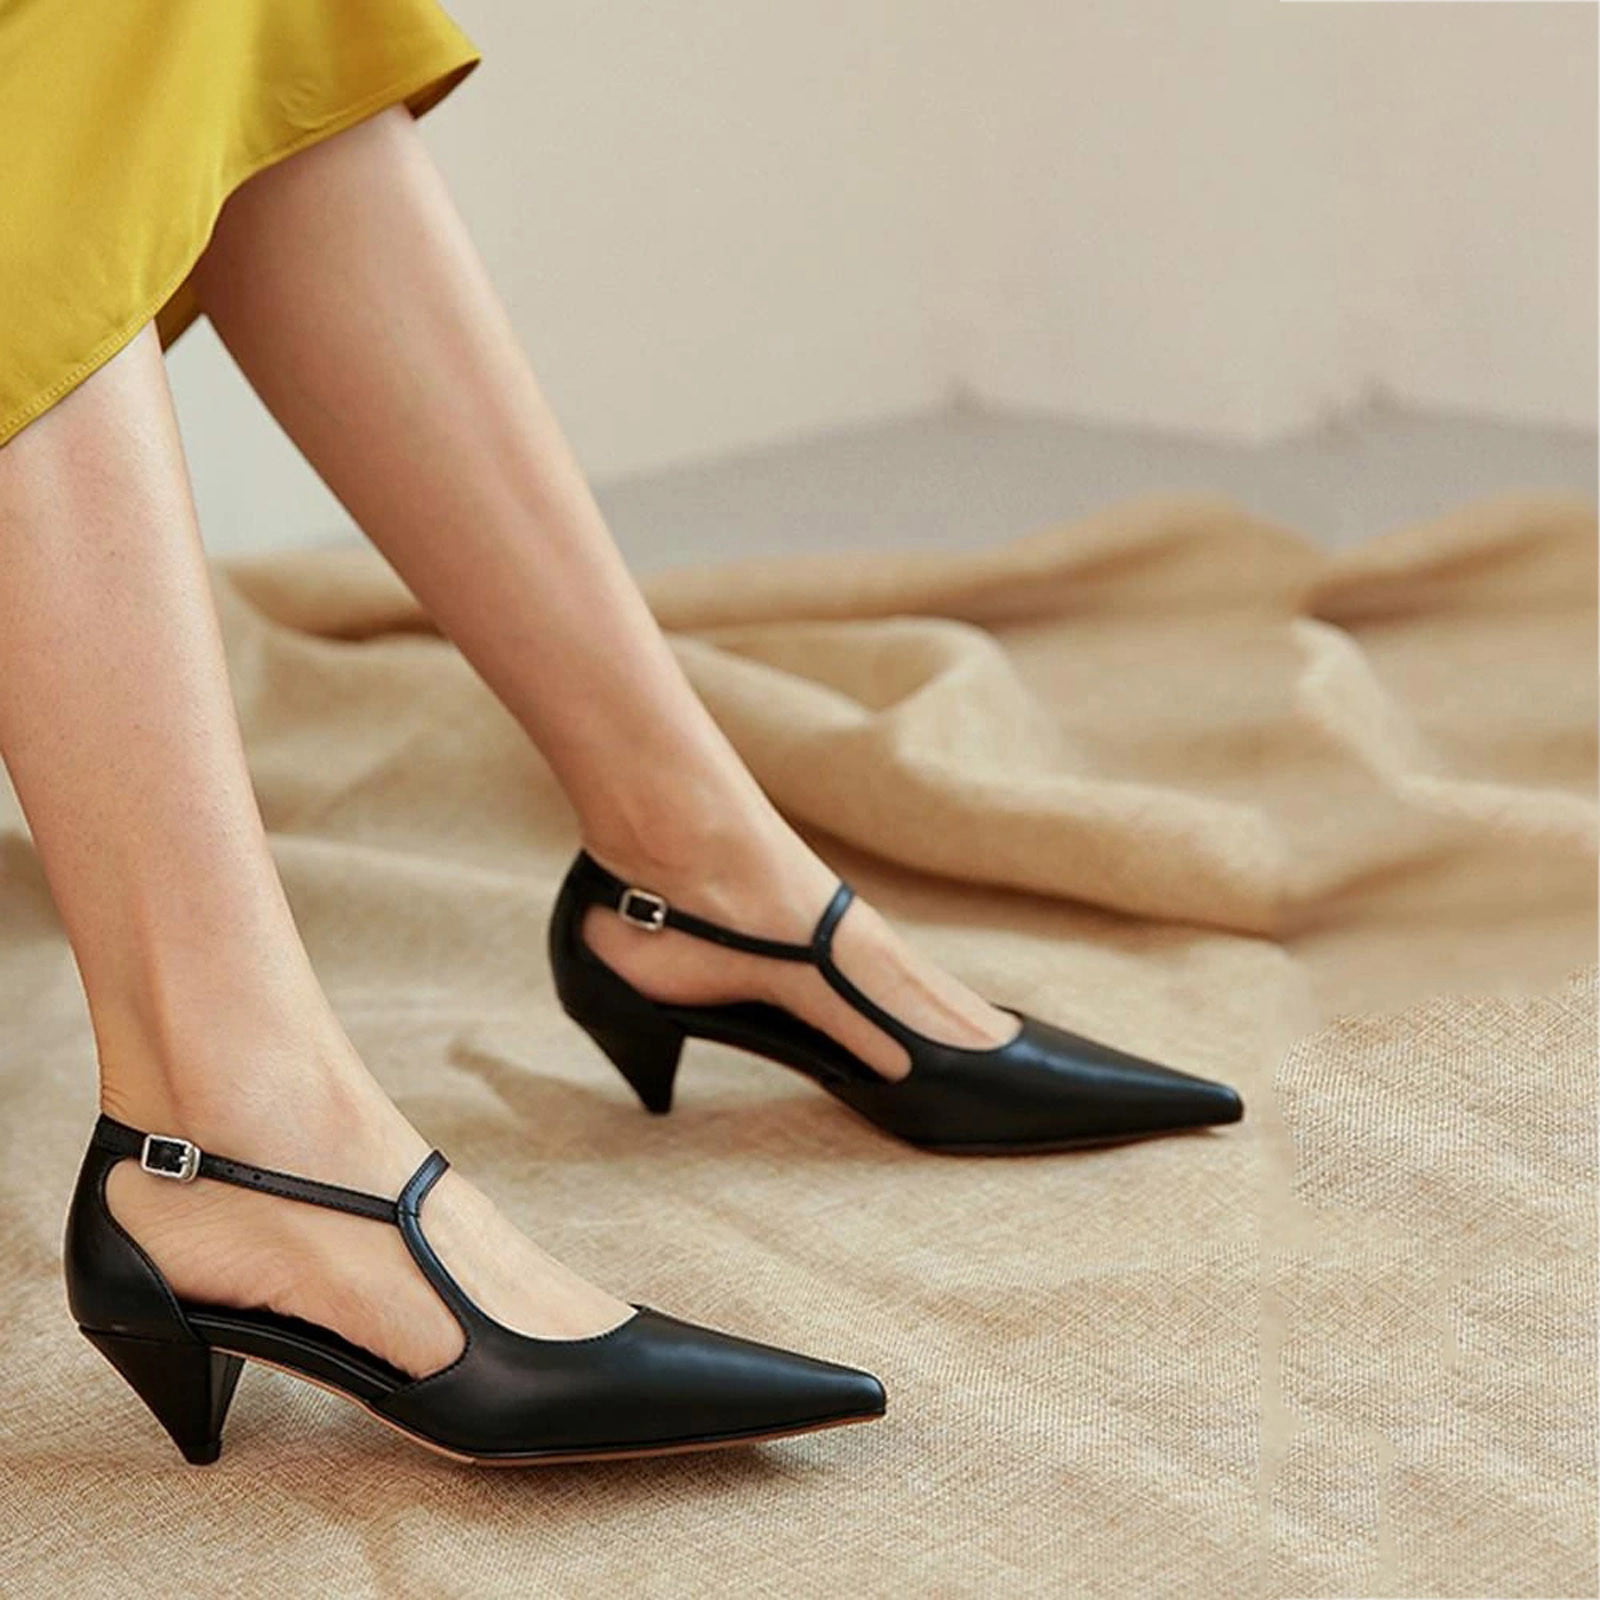 Low heel pumps shoes black suede - Comfortable black stiletto